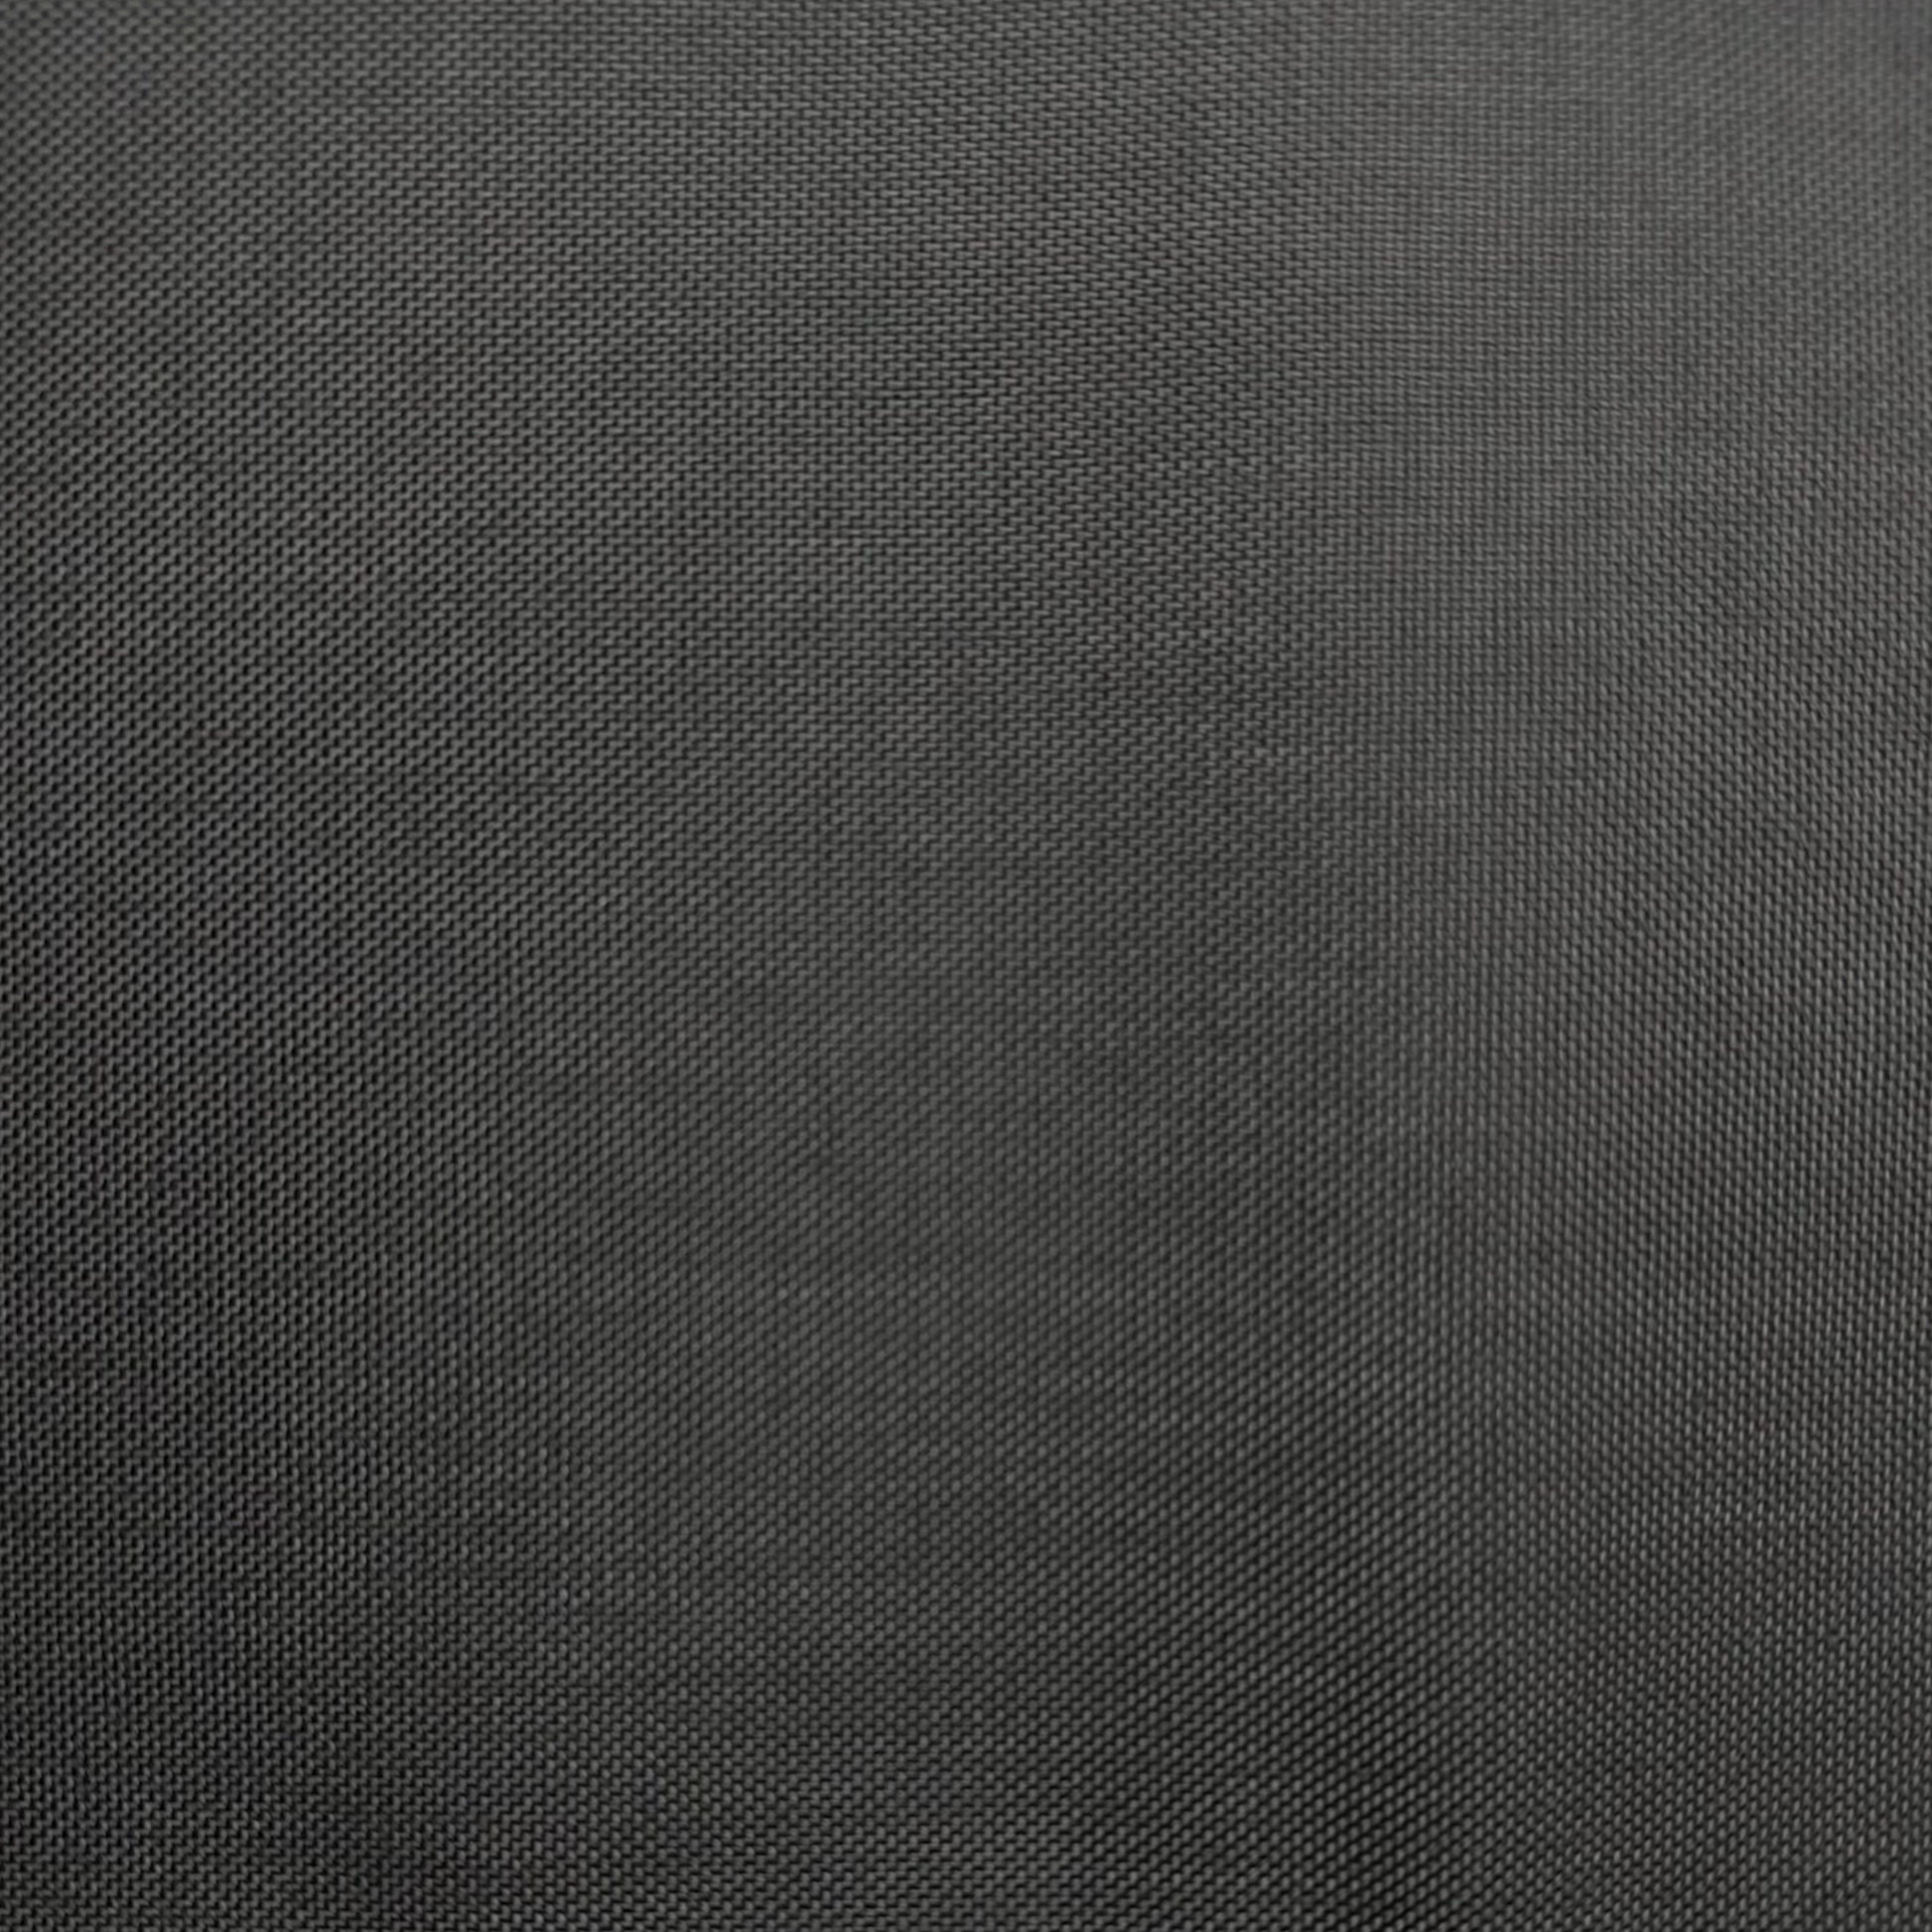 Ripstop Nylon Fabric, Black, USA Made, 70 Denier FR